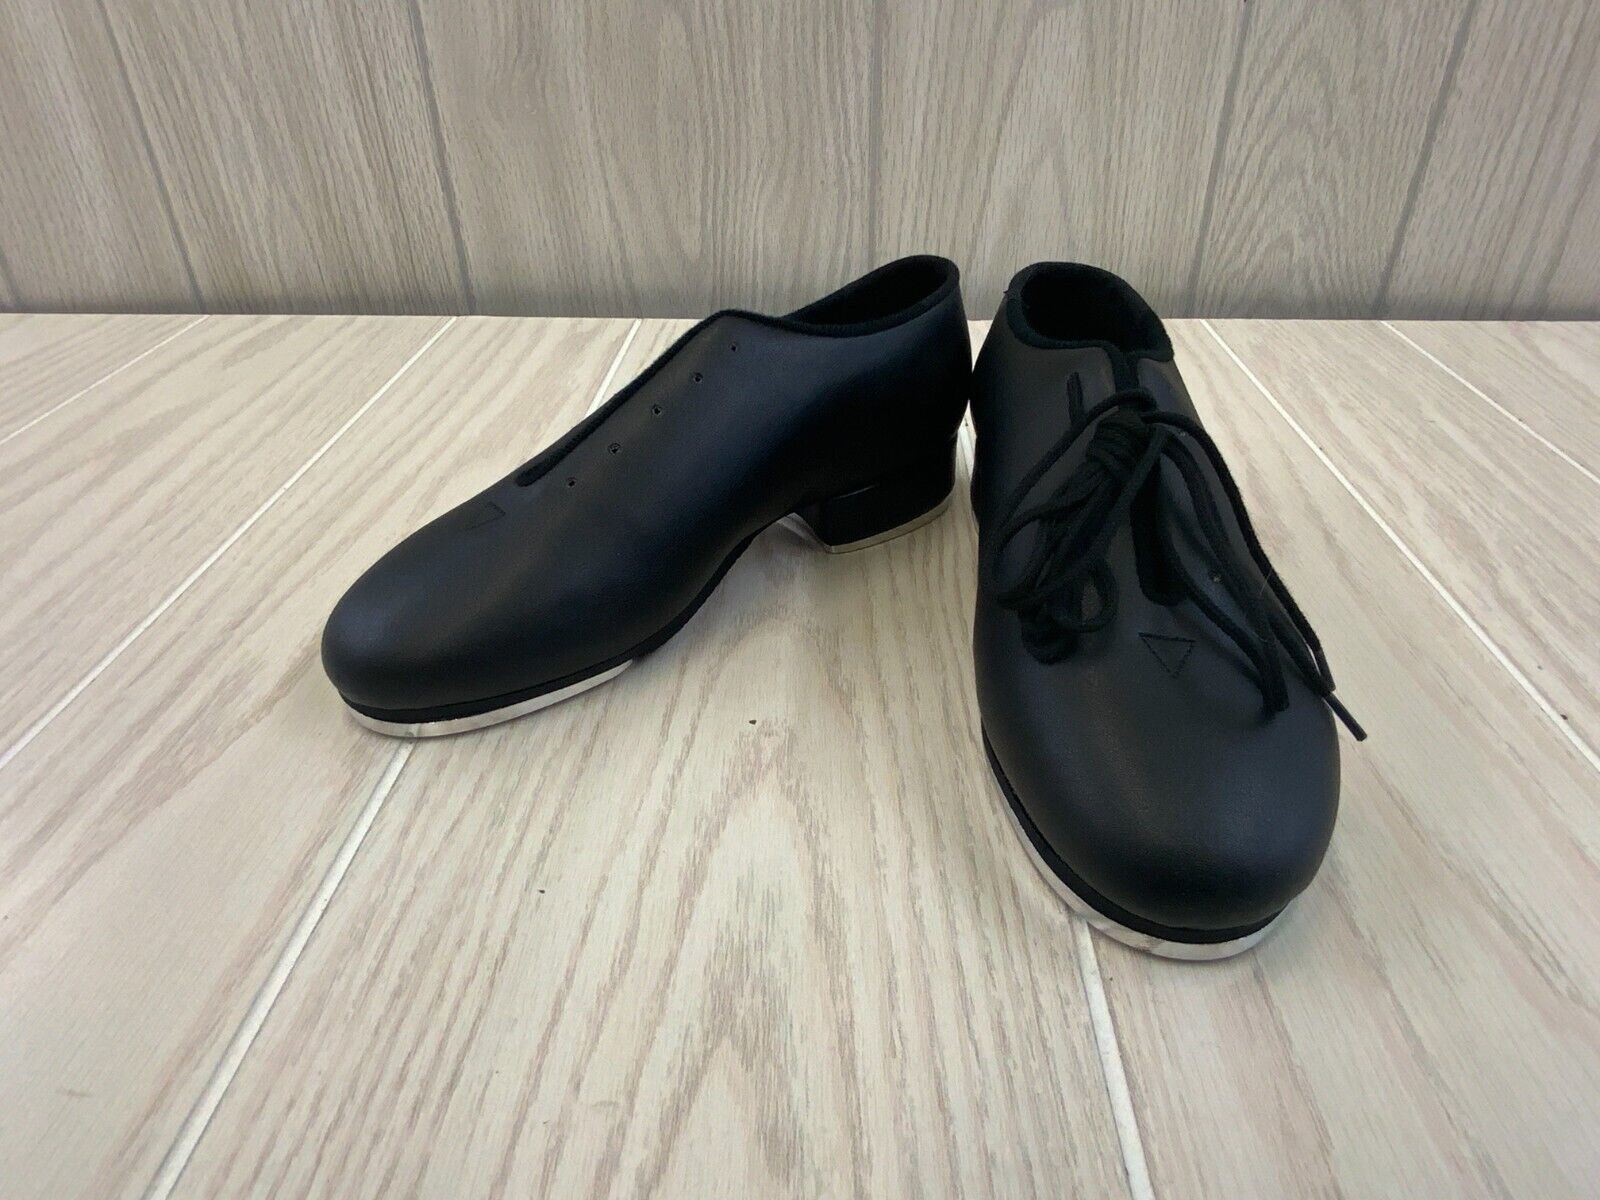 Leo Jazz Tap Dance Shoes, Women's Size 6.5 M, Black New Msrp $40